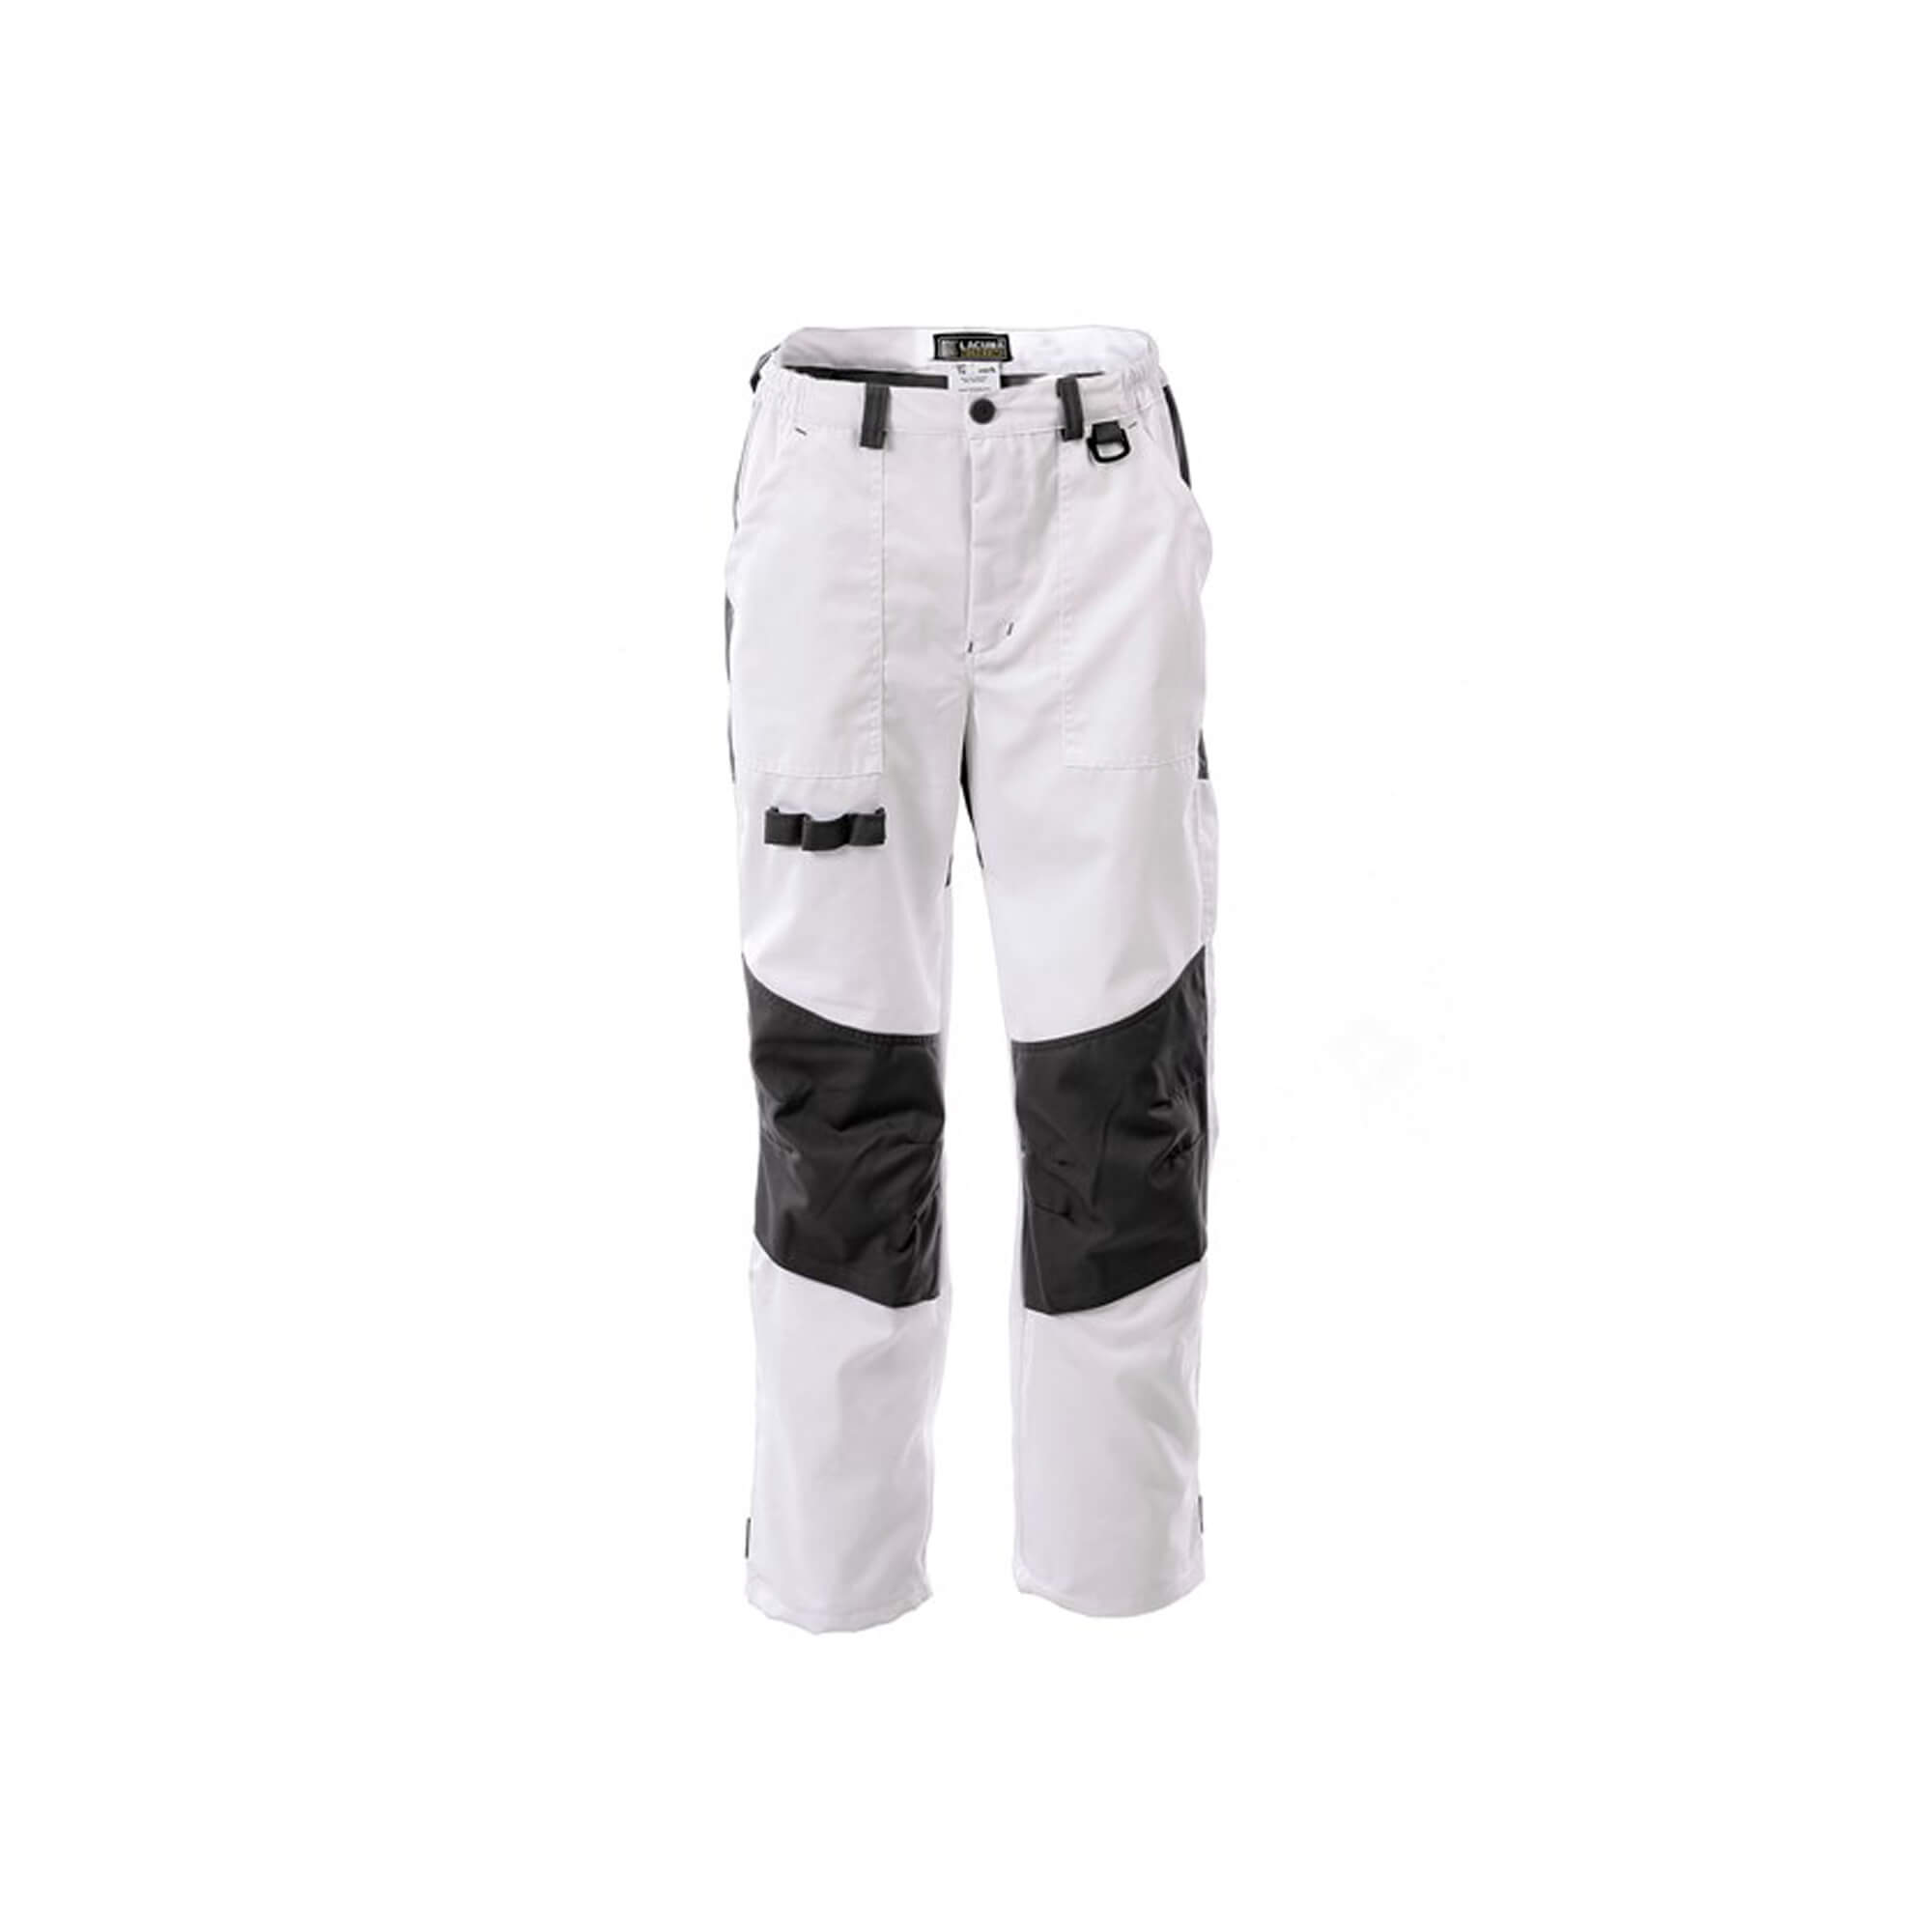 Work pants classic Spektar, white color